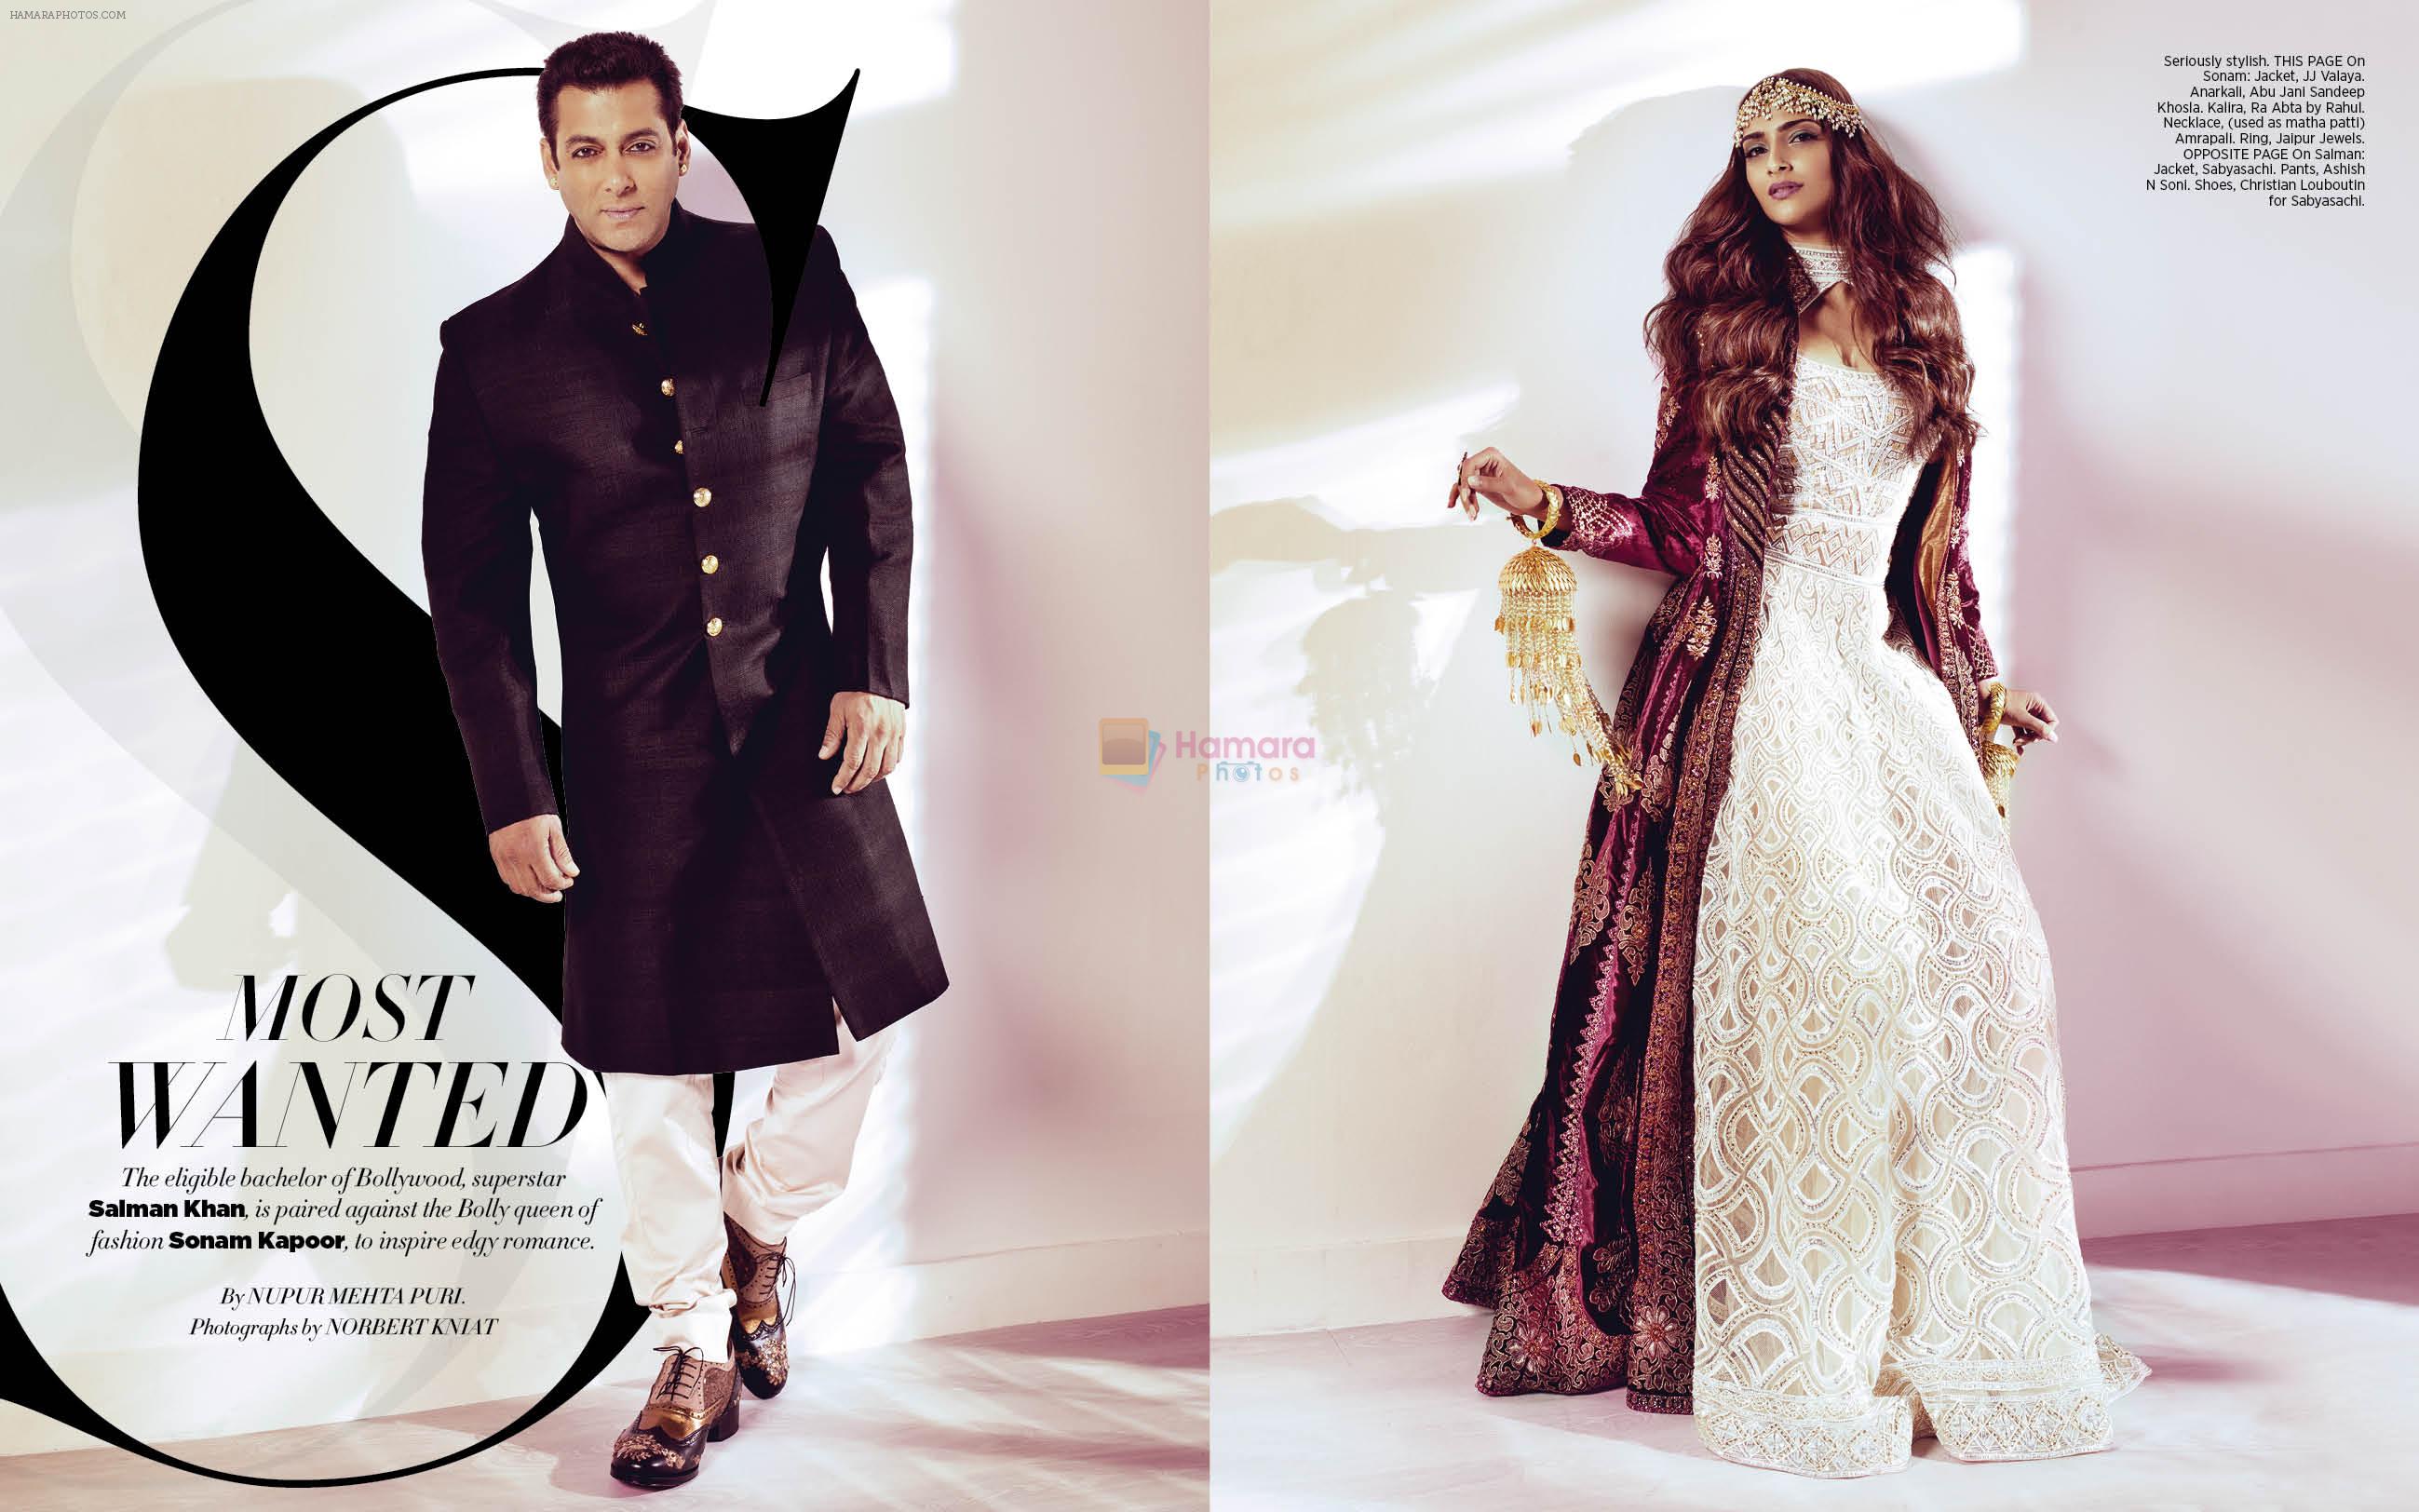 Salman Khan & Sonam Kapoor on the cover of Harper's Bazaar Bride on 6th Oct 2015